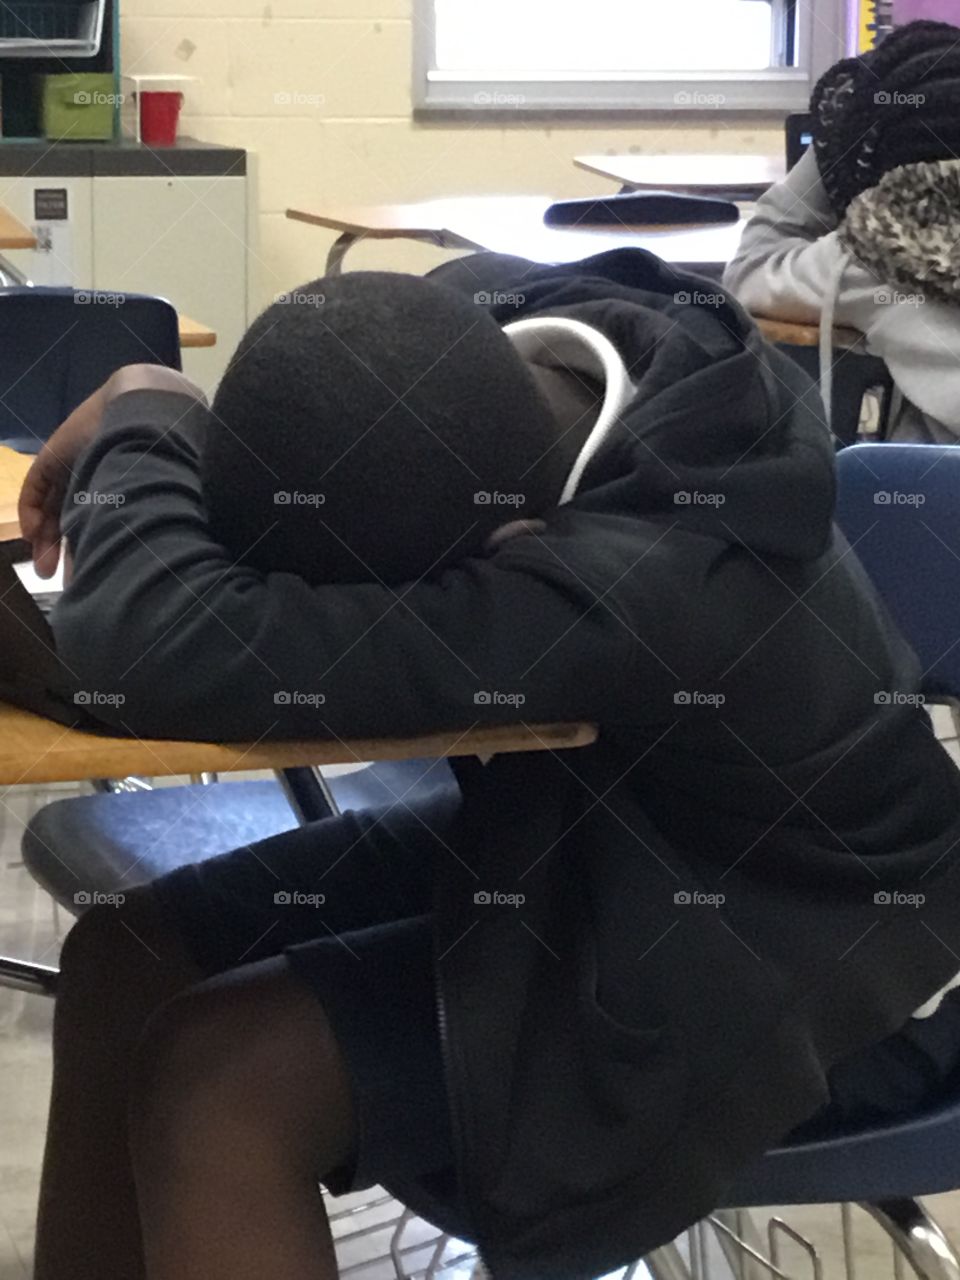 Student sleeps in class